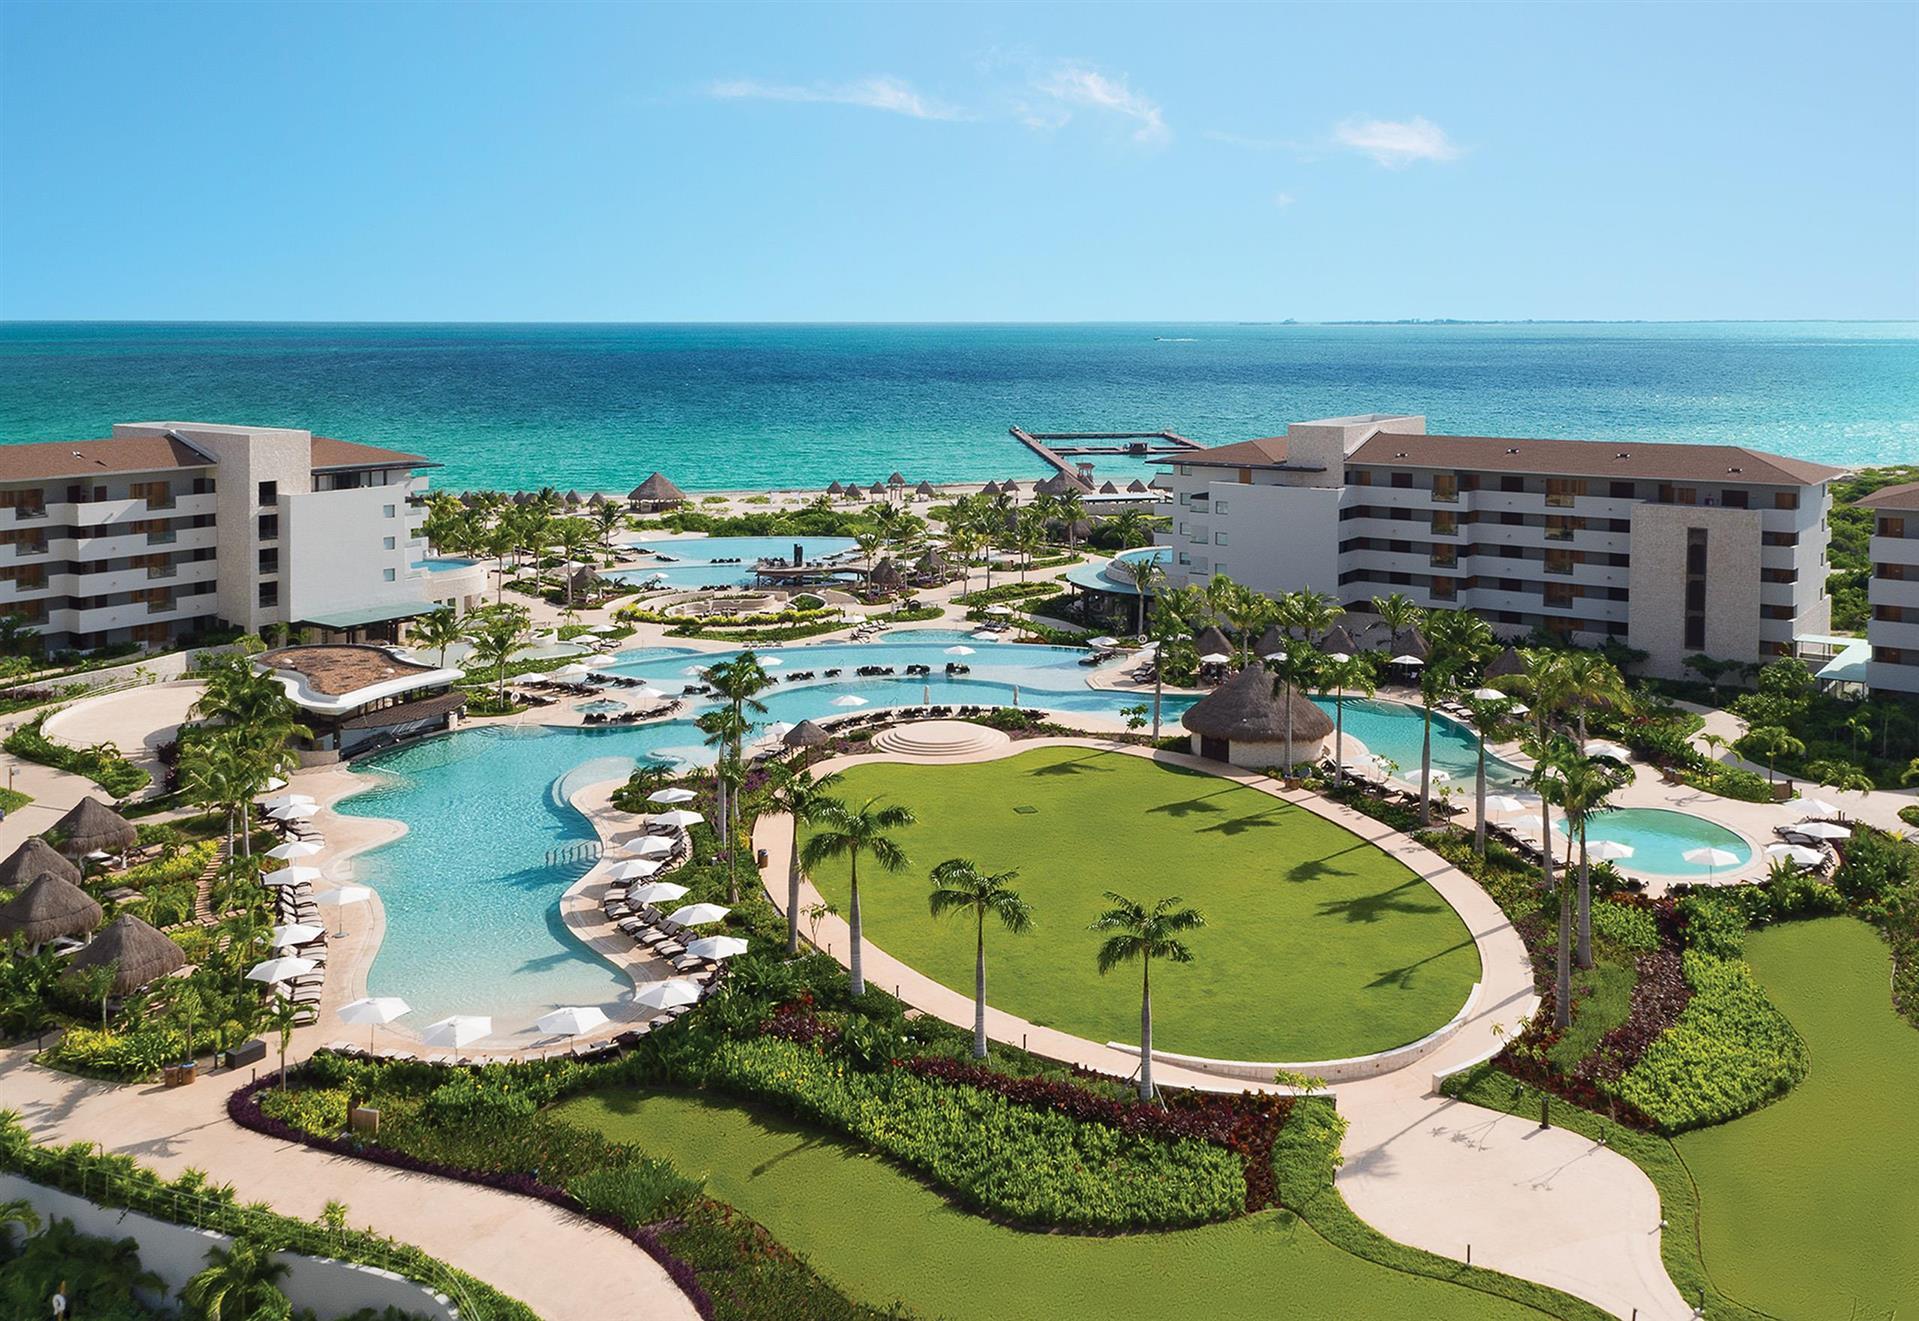 Dreams Playa Mujeres Golf & Spa Resort in Cancun, MX